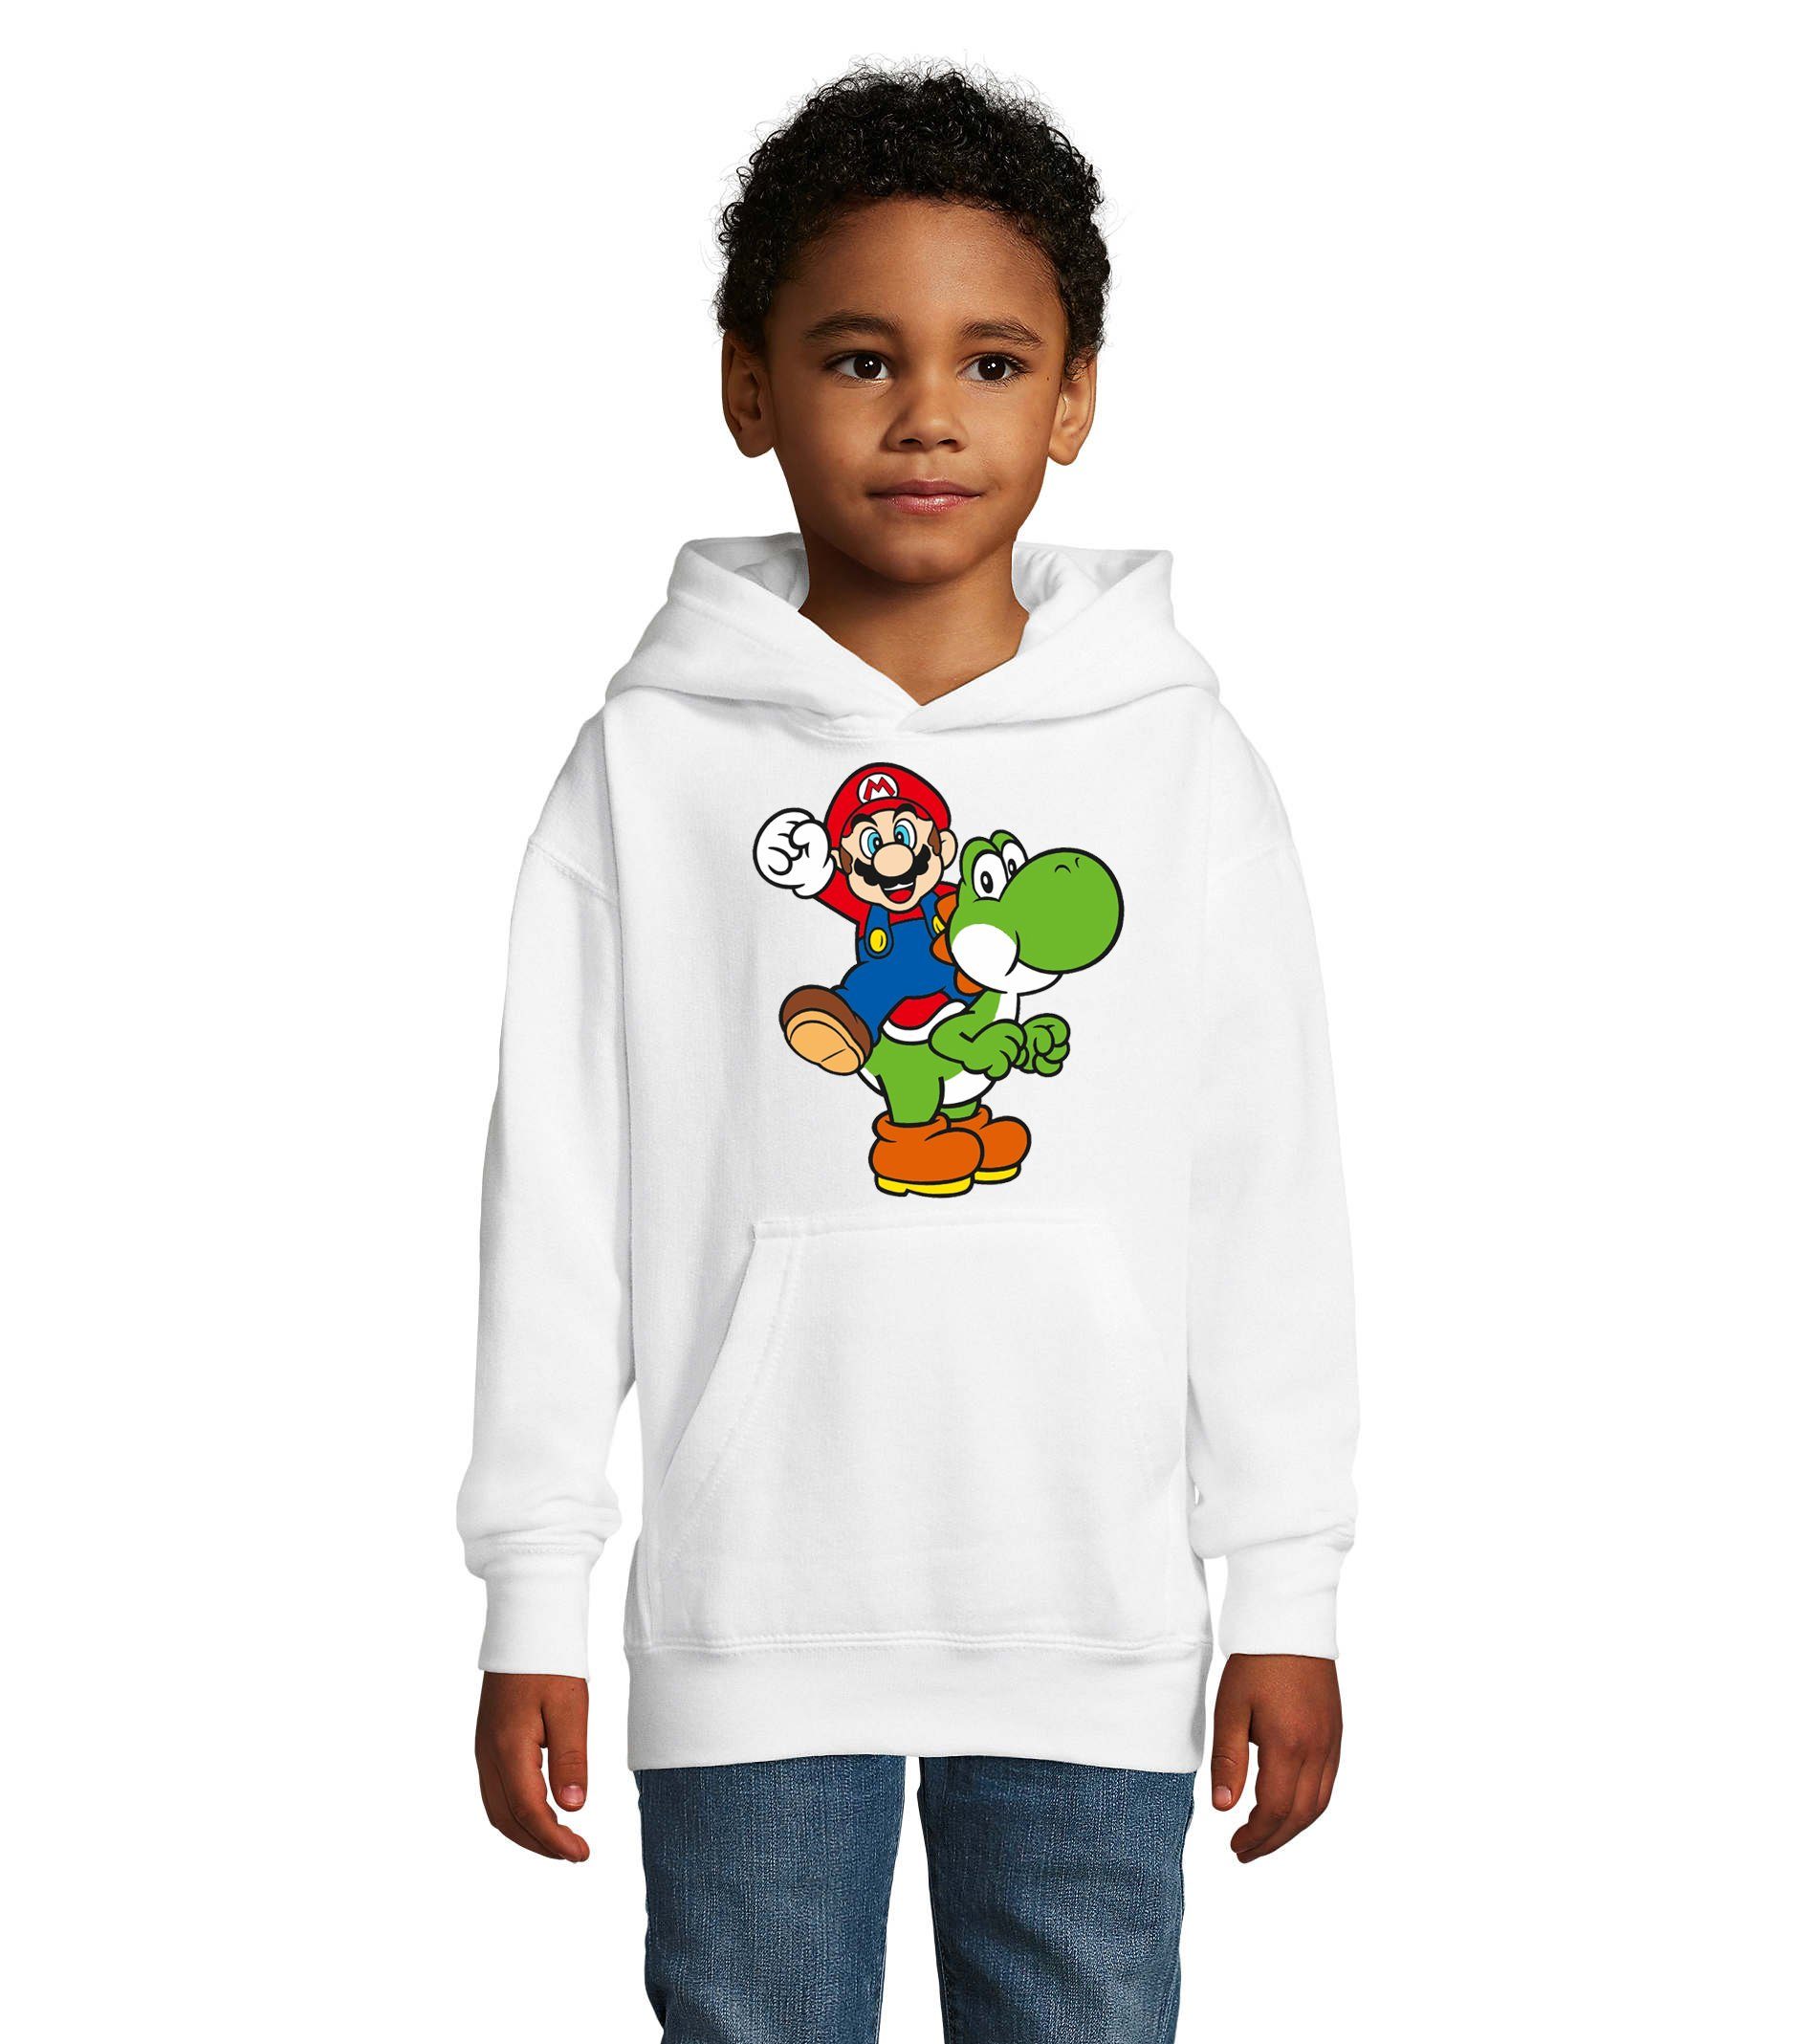 Blondie & Brownie Hoodie Kinder Yoshi & Mario Konsole Super Nintendo Luigi mit Kaputze Weiss